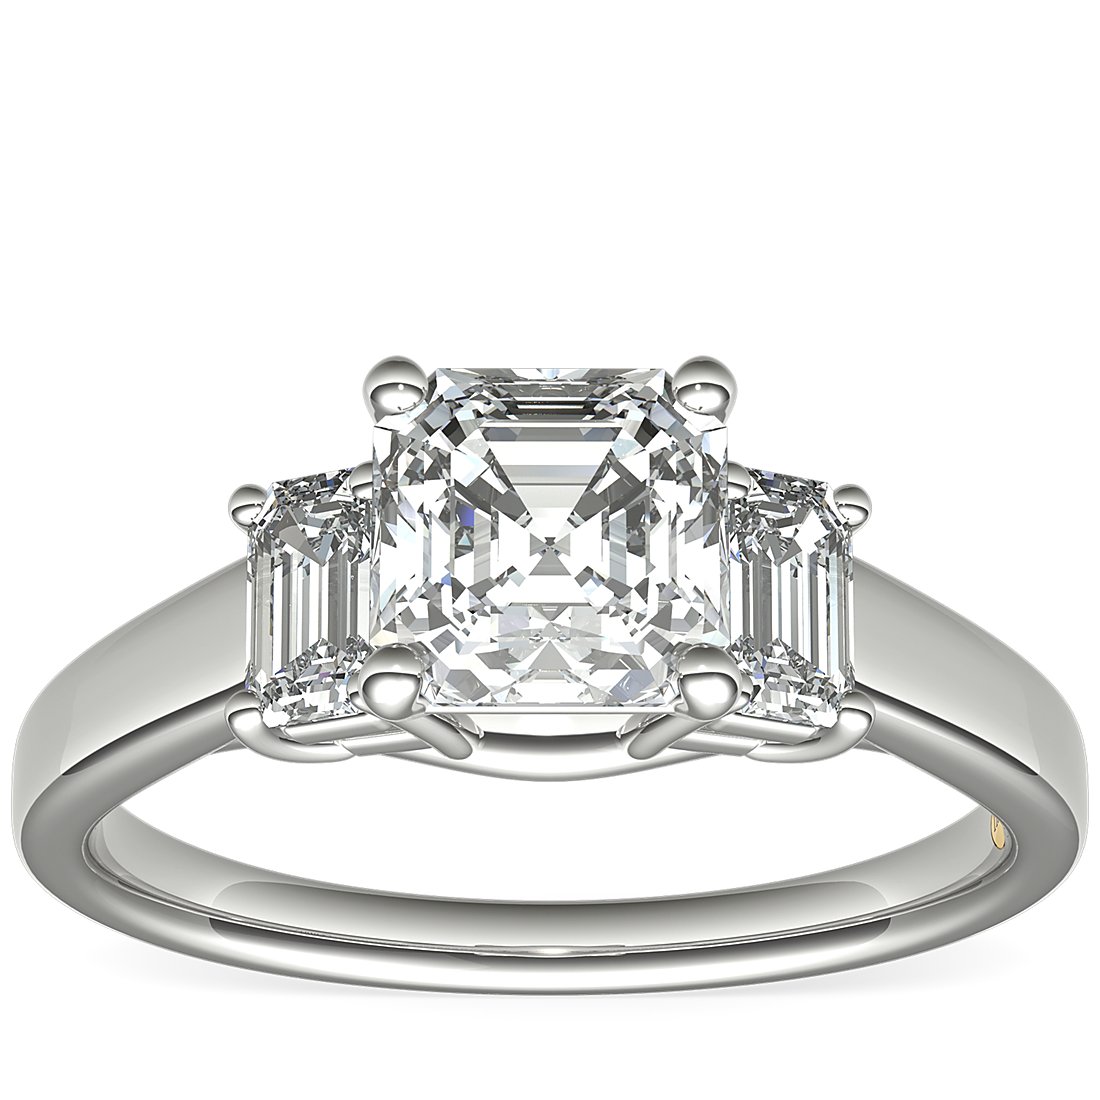 Three-stone diamond engagement ring